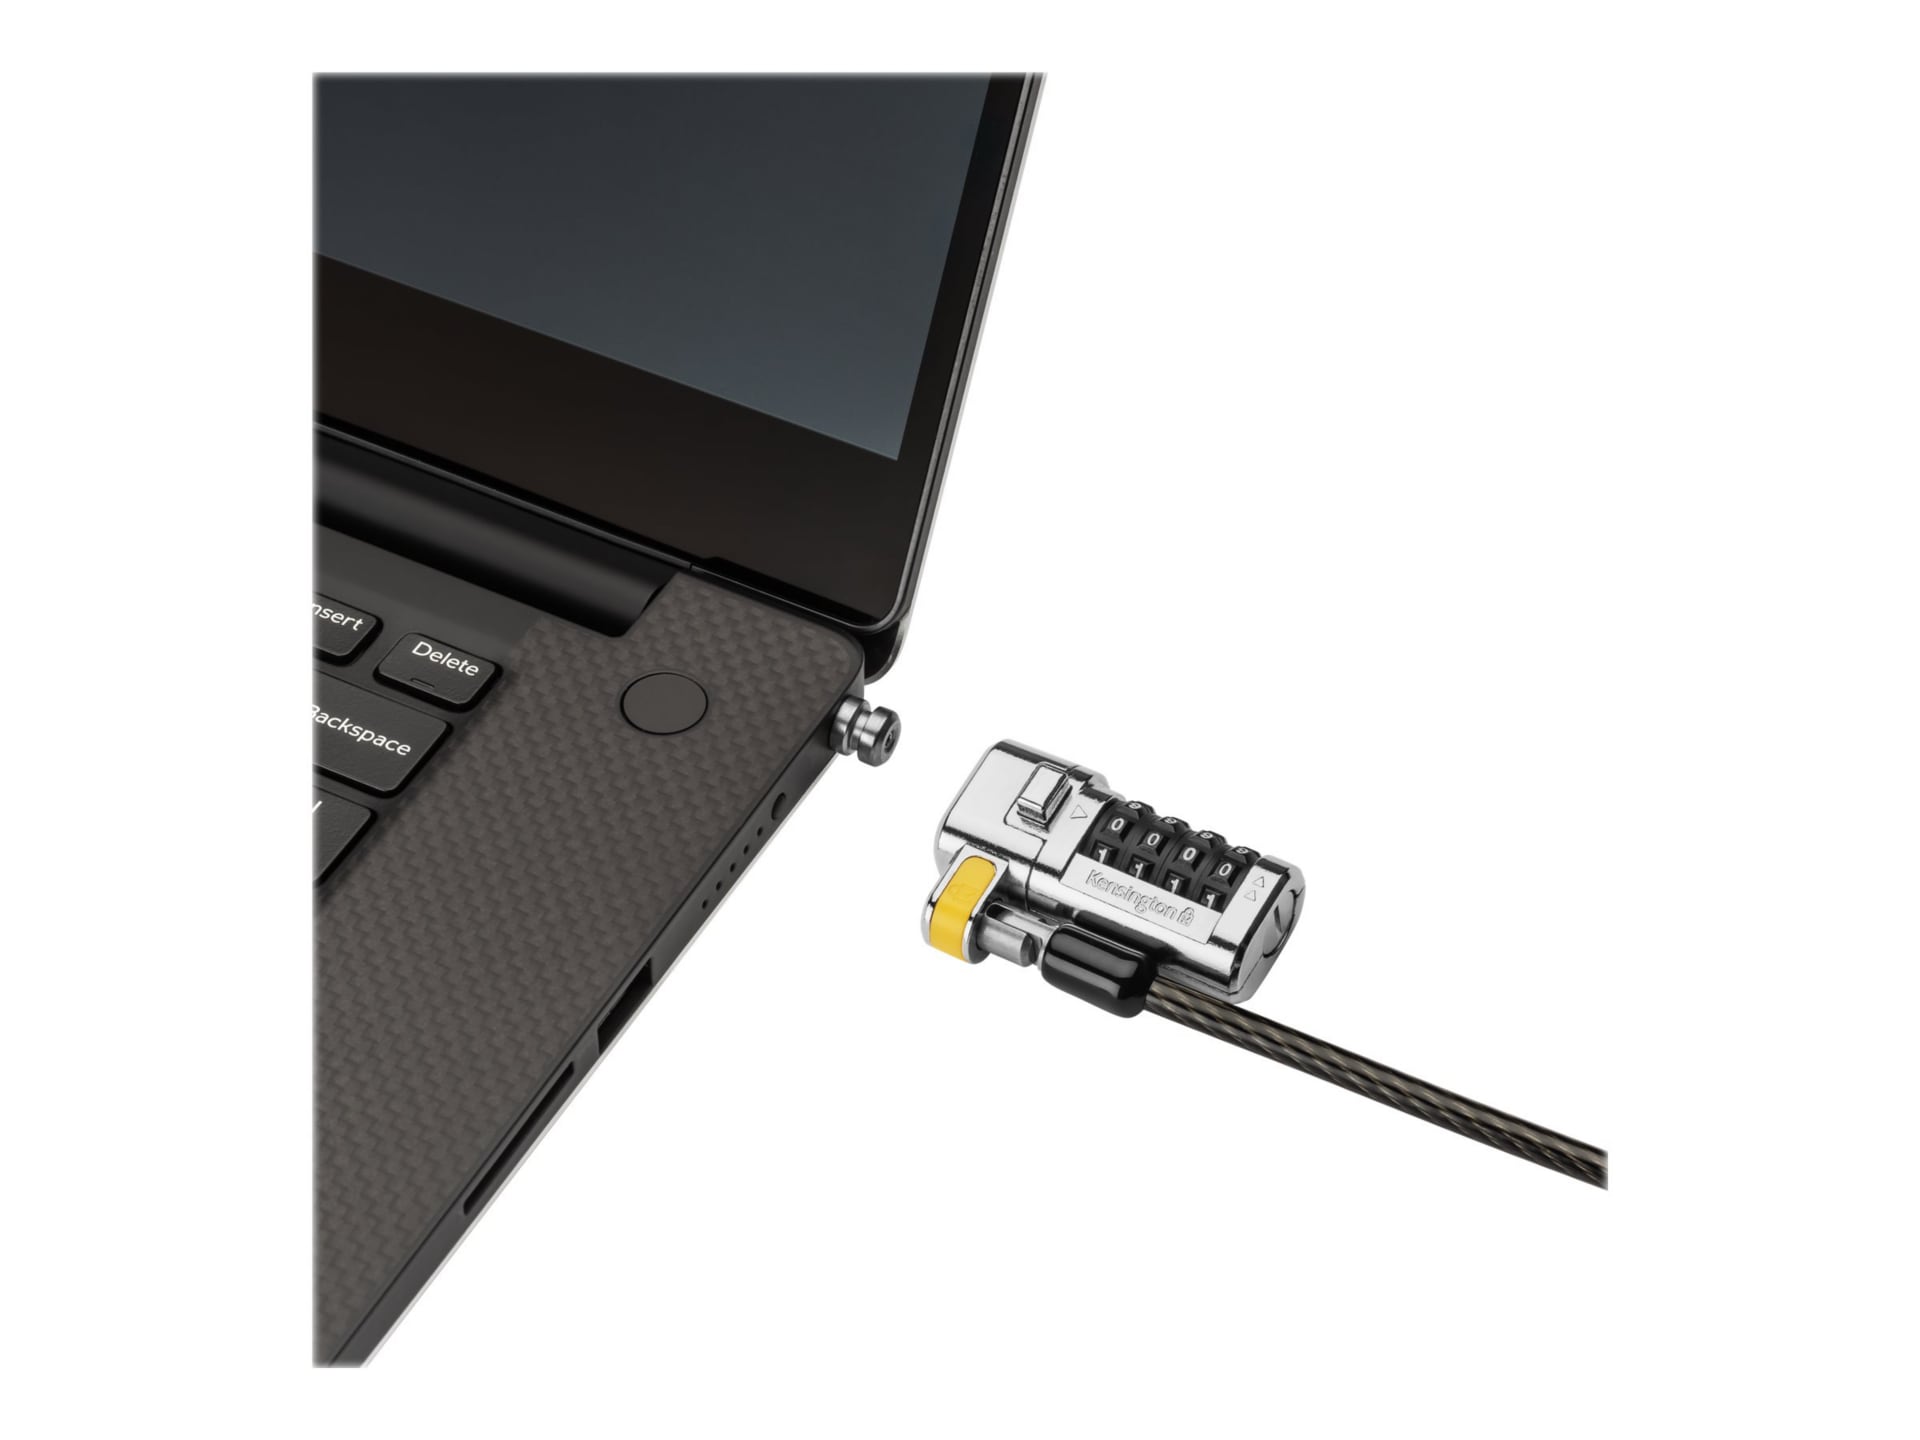 Kensington ClickSafe Universal Combination Laptop Lock - security cable loc